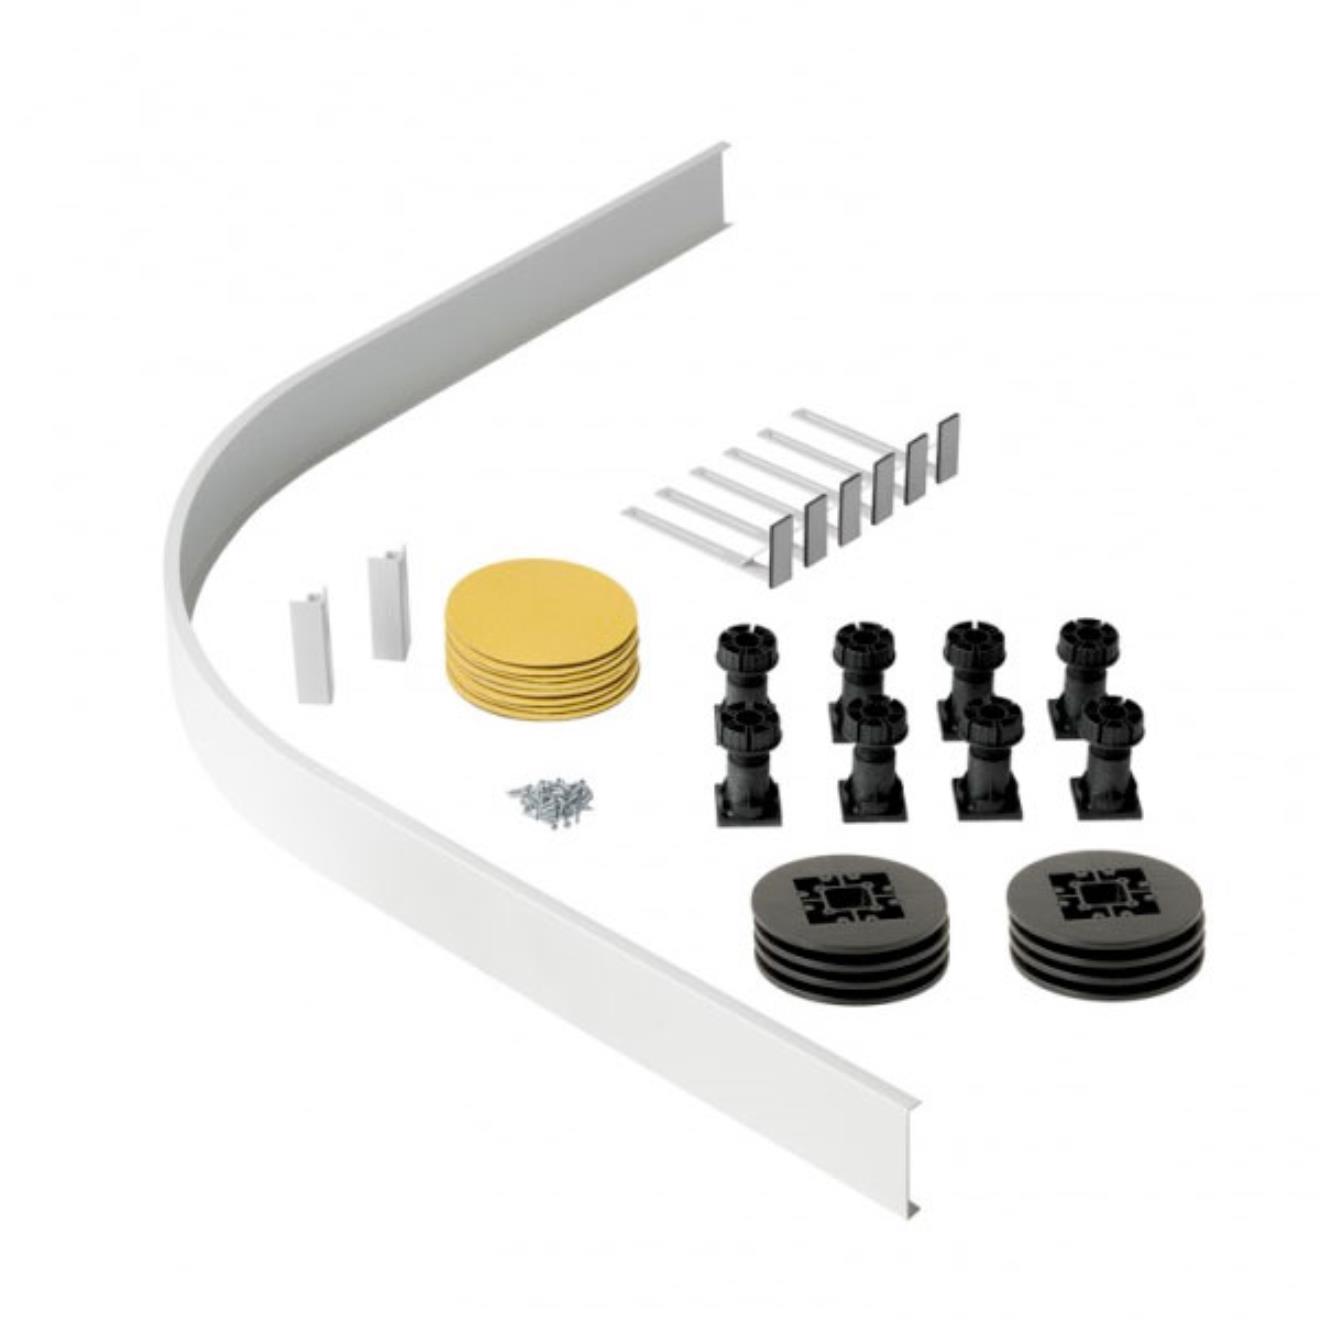 MX Riser Kit for Quadrant or Offset Quadrant Low Profile Shower Tray 1200 x 900mm